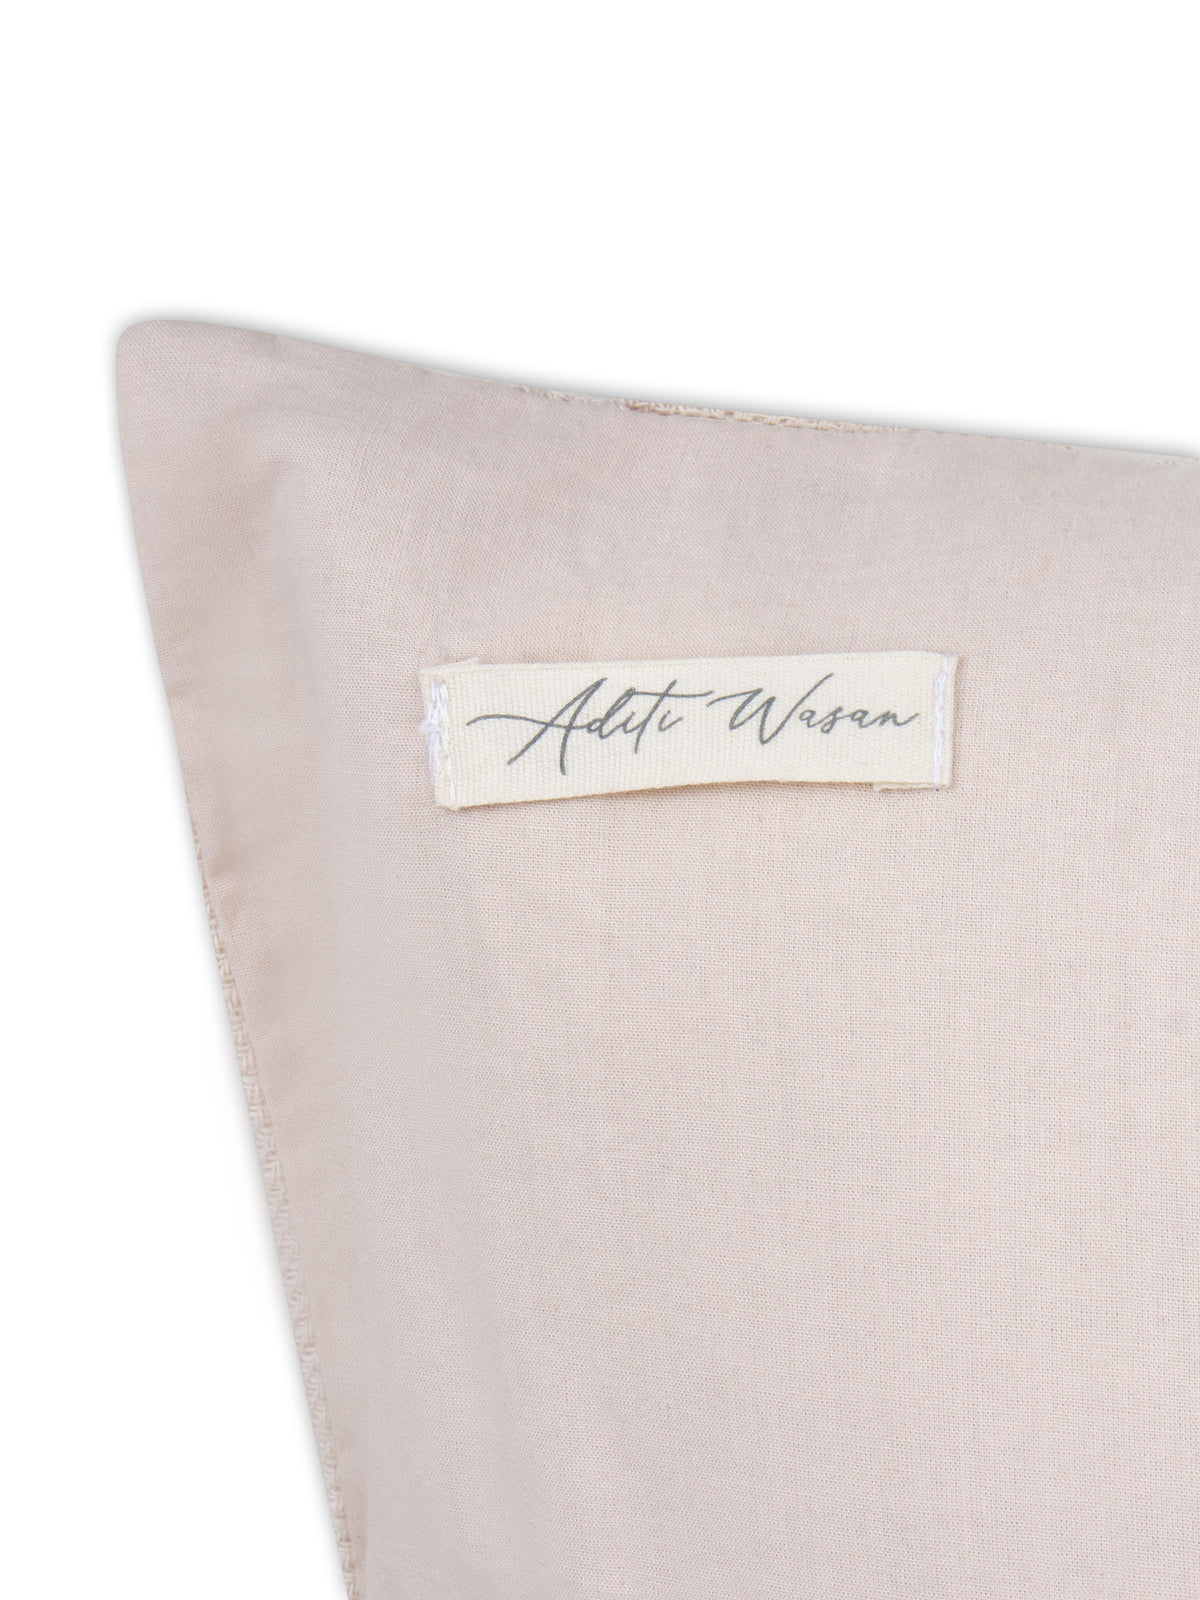 Offwhite Cotton slub cushion cover